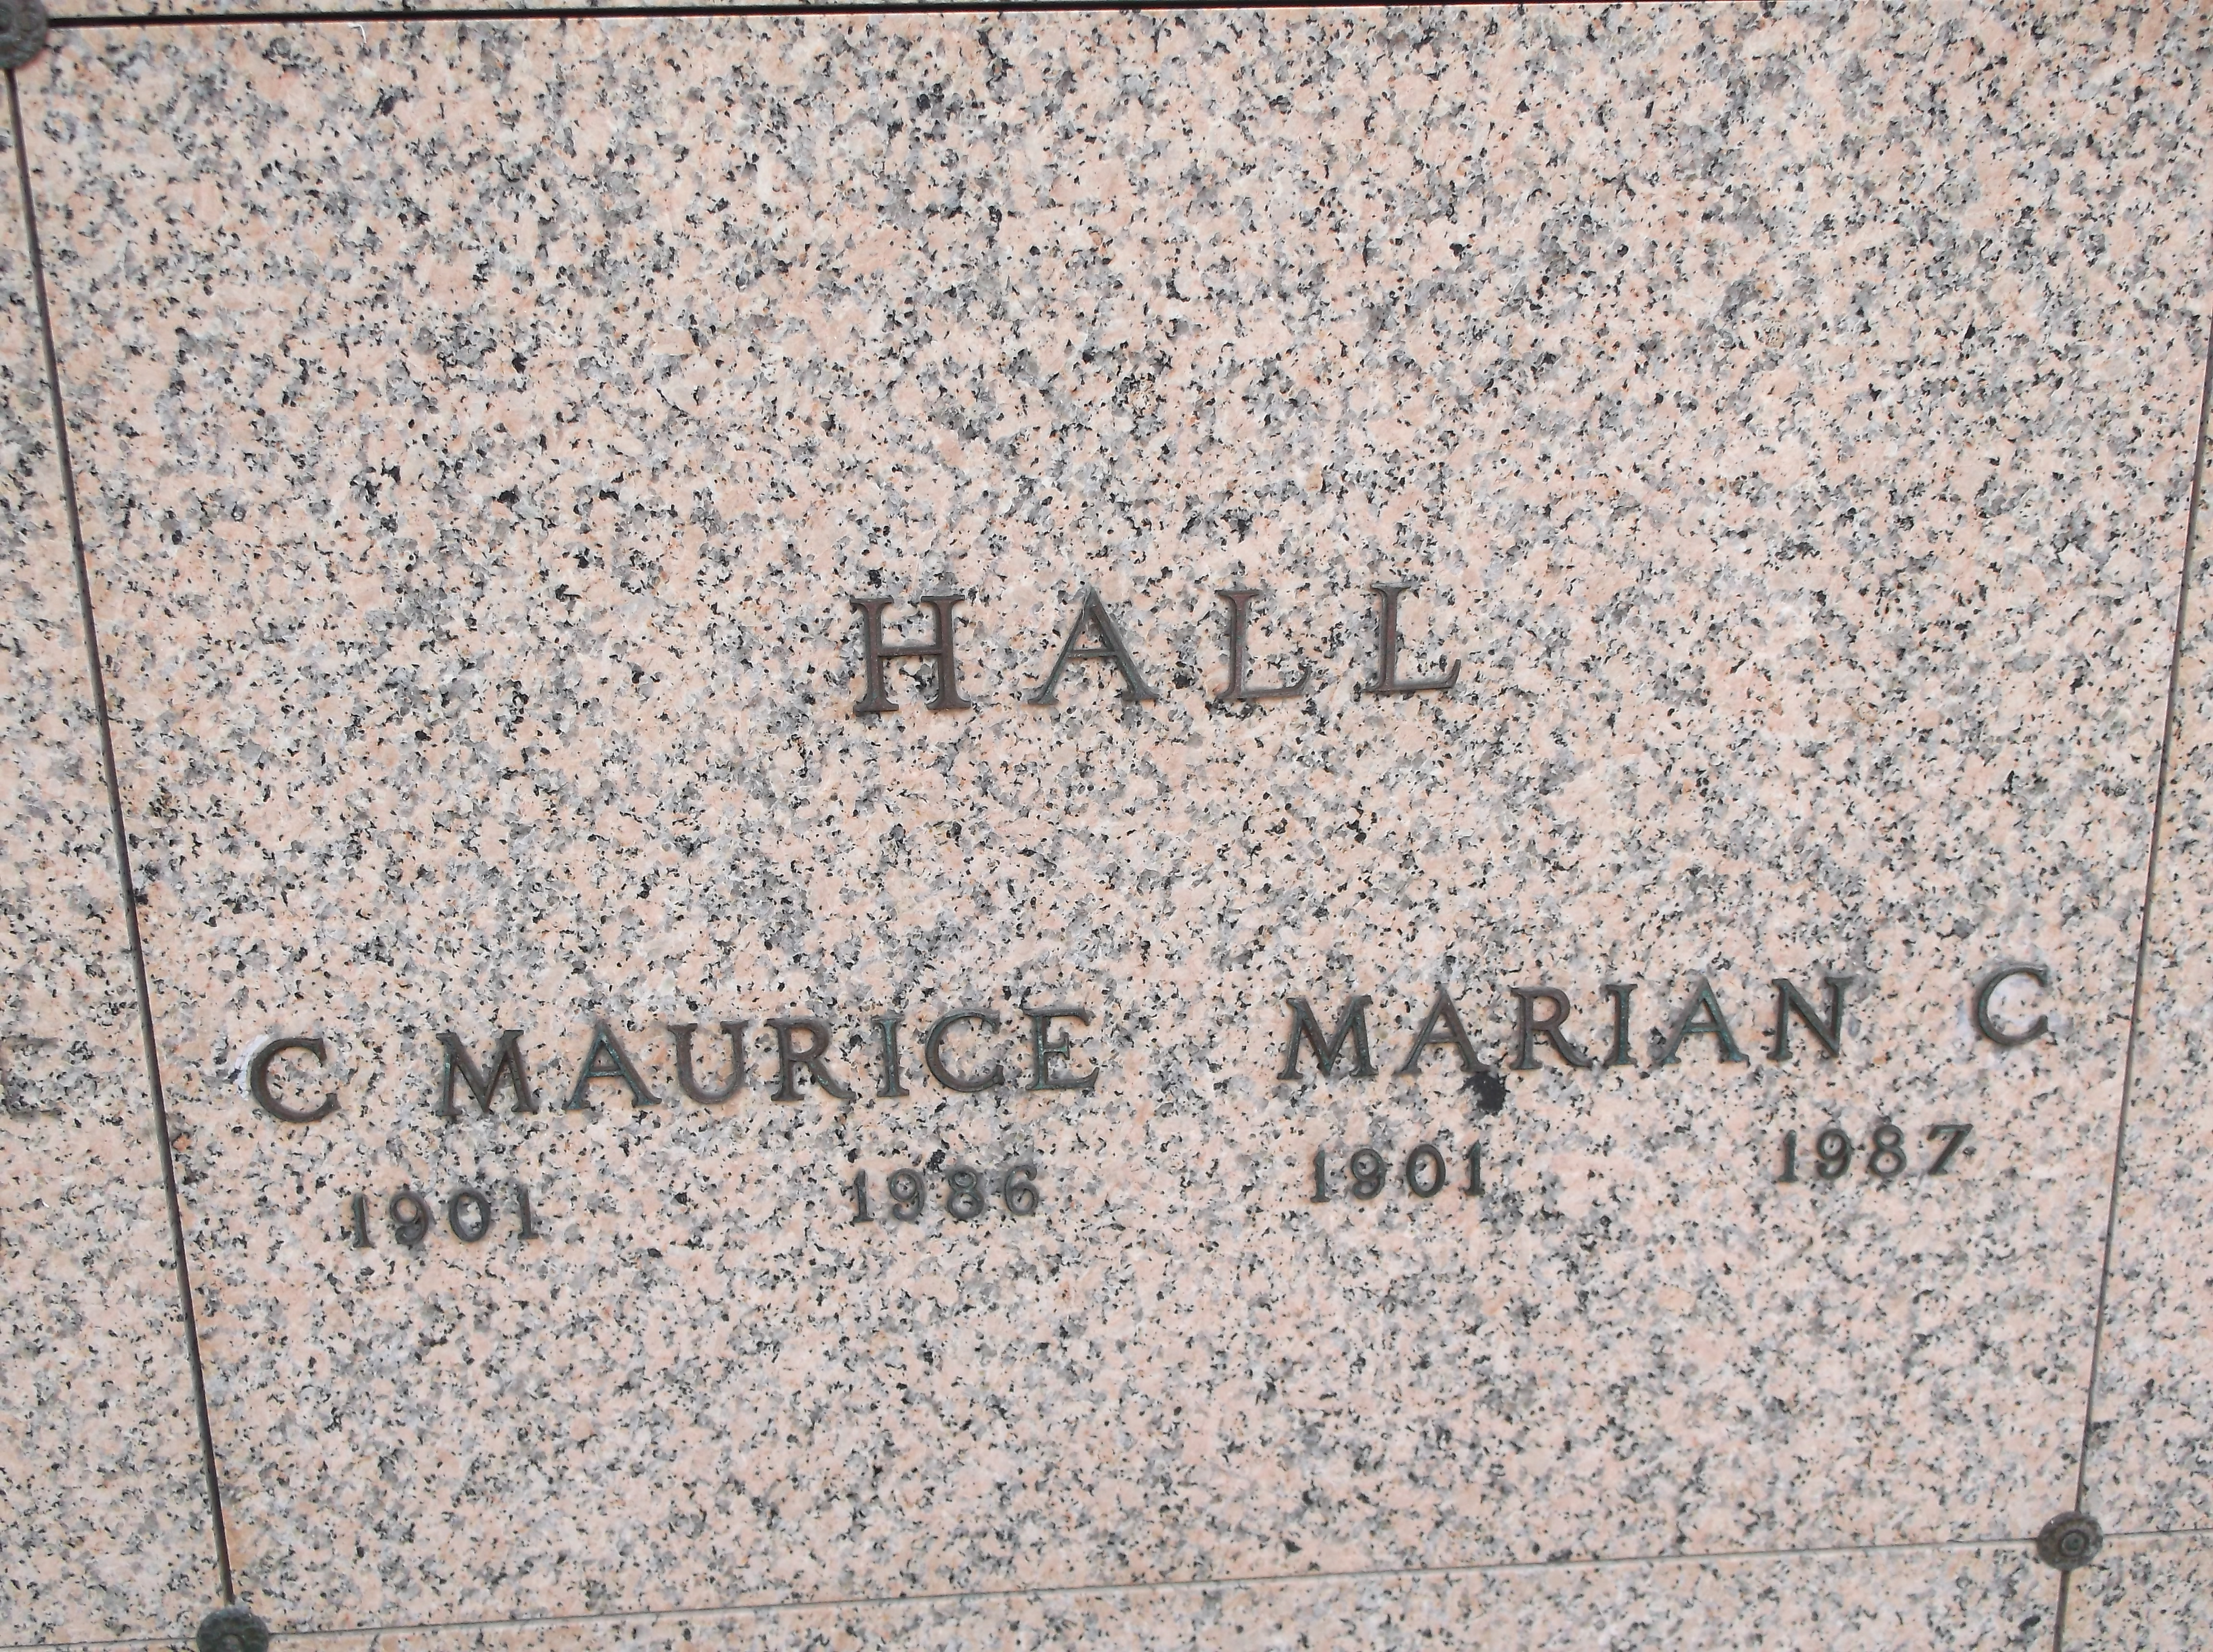 Marian C Hall